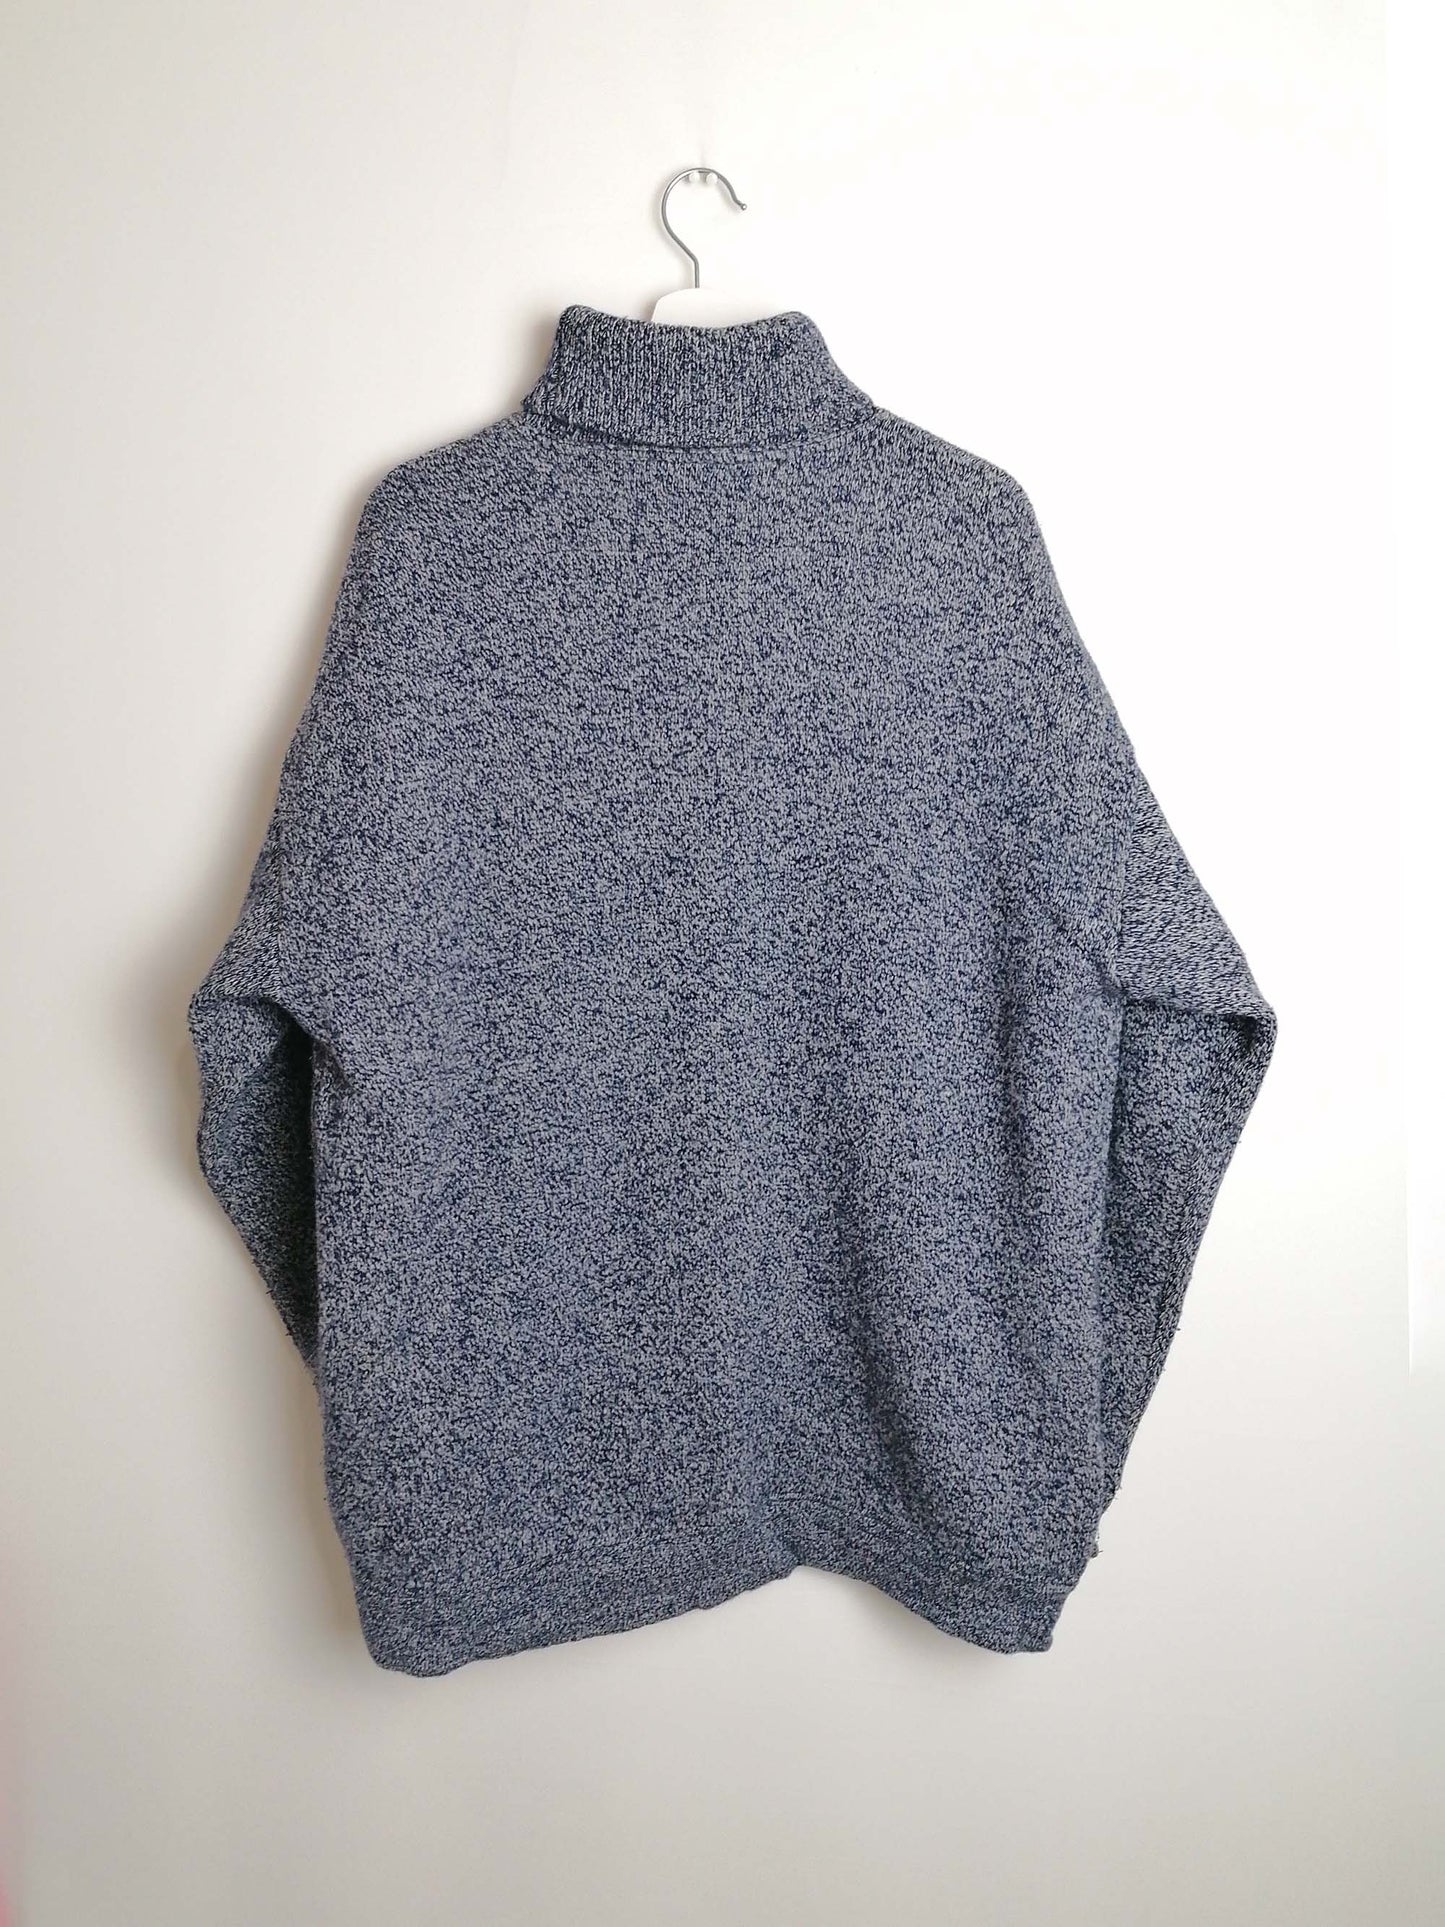 90's ADIDAS Knit Turtleneck Sweater - size M men